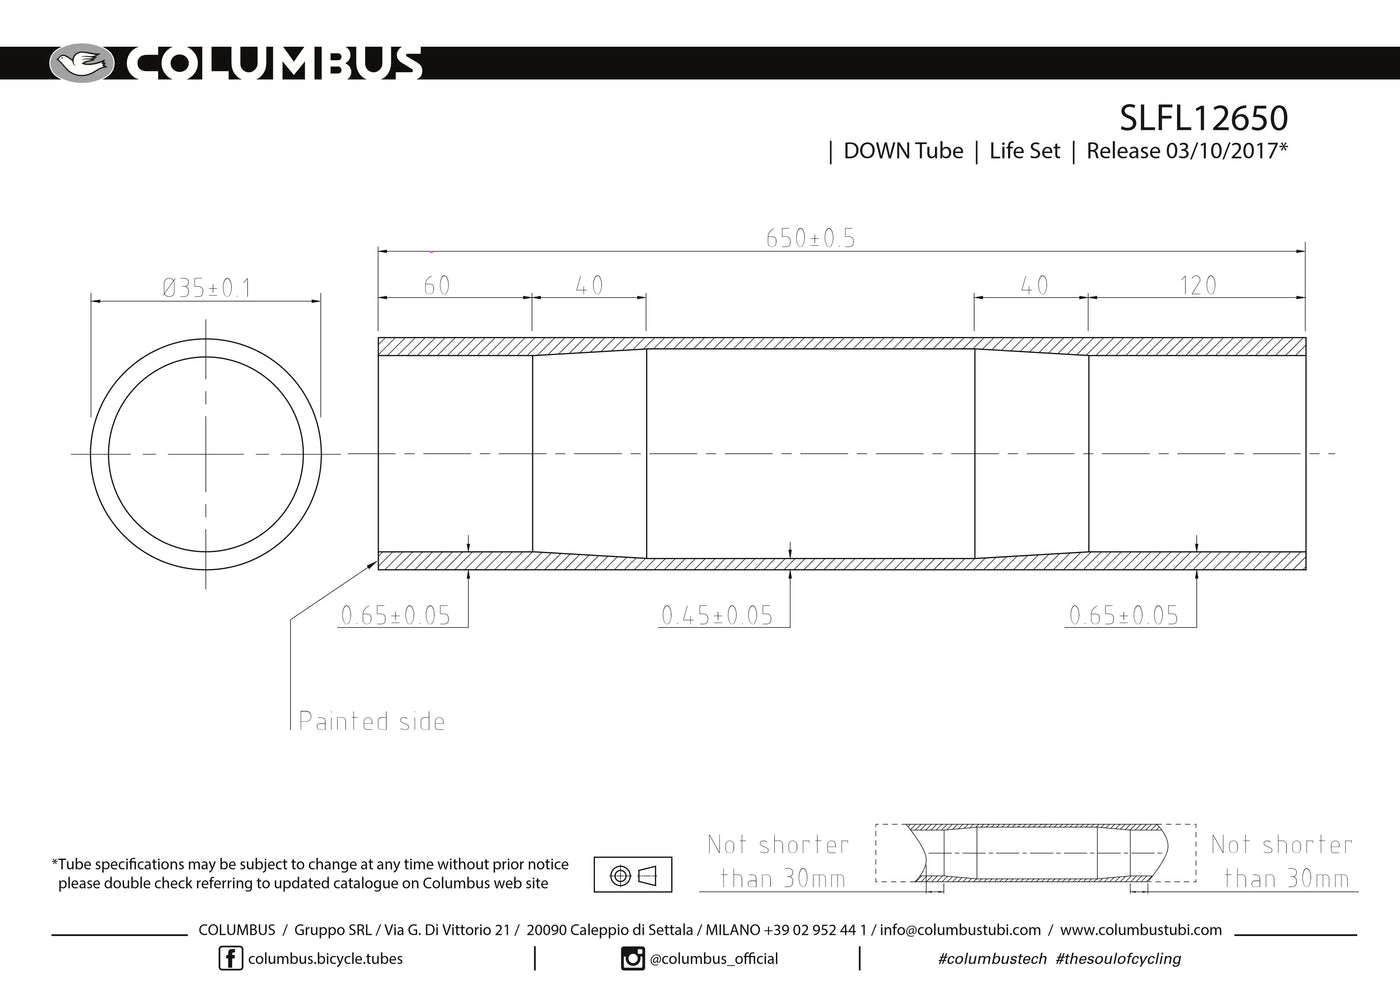 SLFL12650  Columbus Tubing Life down tube - 35 diameter - .65/.45/.65 wall thickness. Length = 650